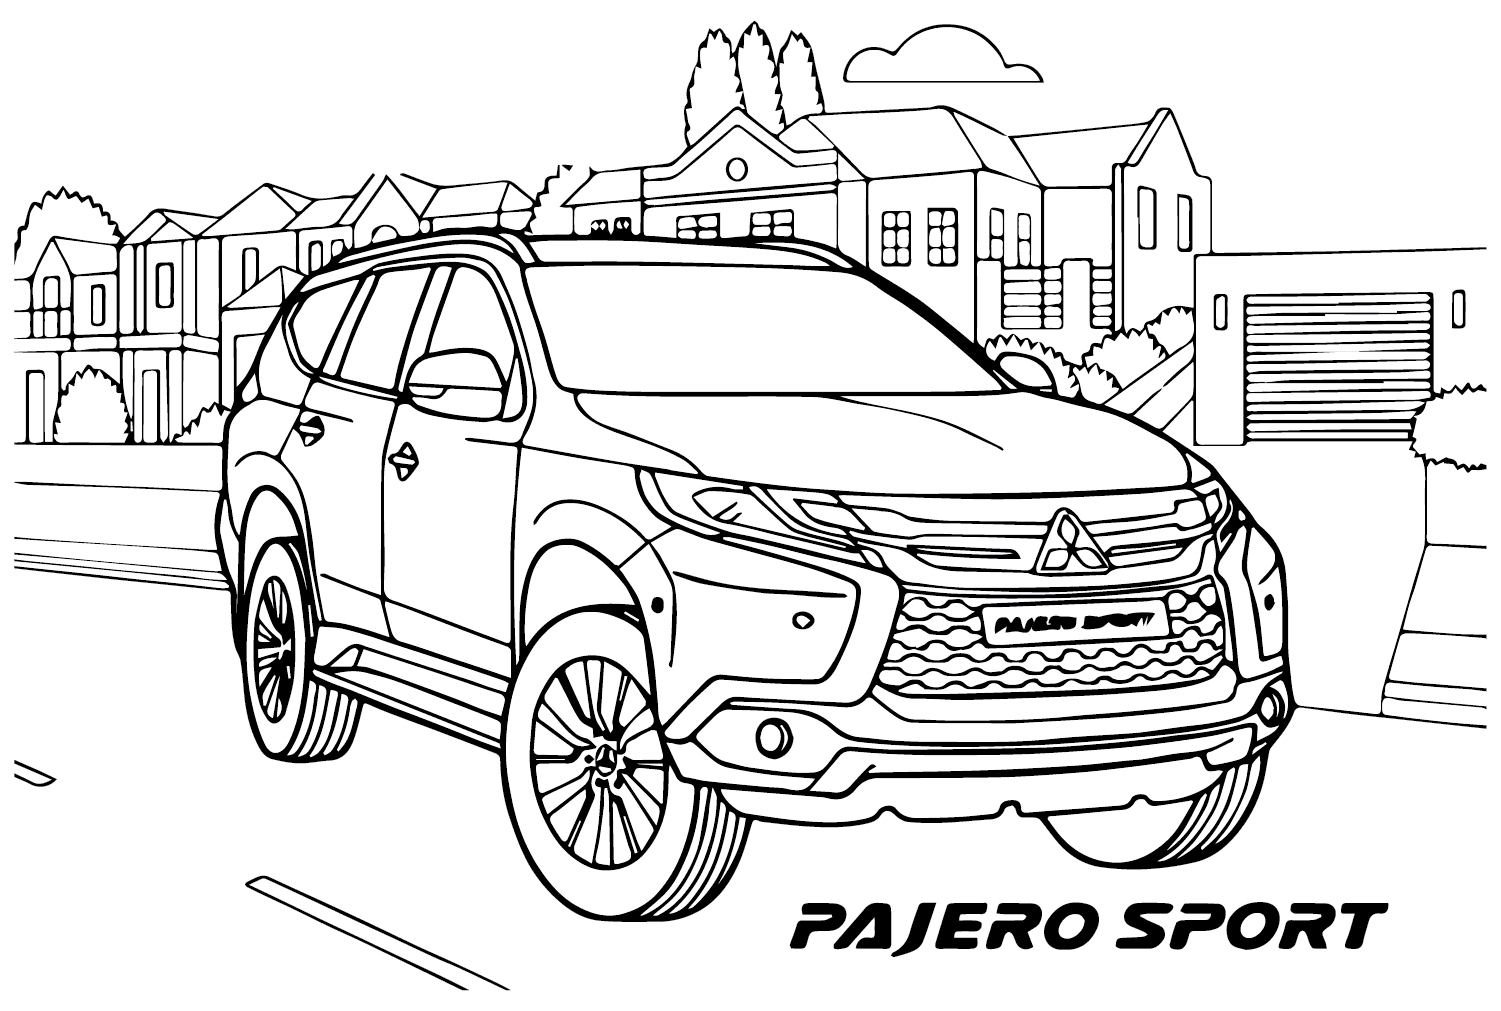 Mitsubishi Pajero Sport Coloring Page from Mitsubishi Motors